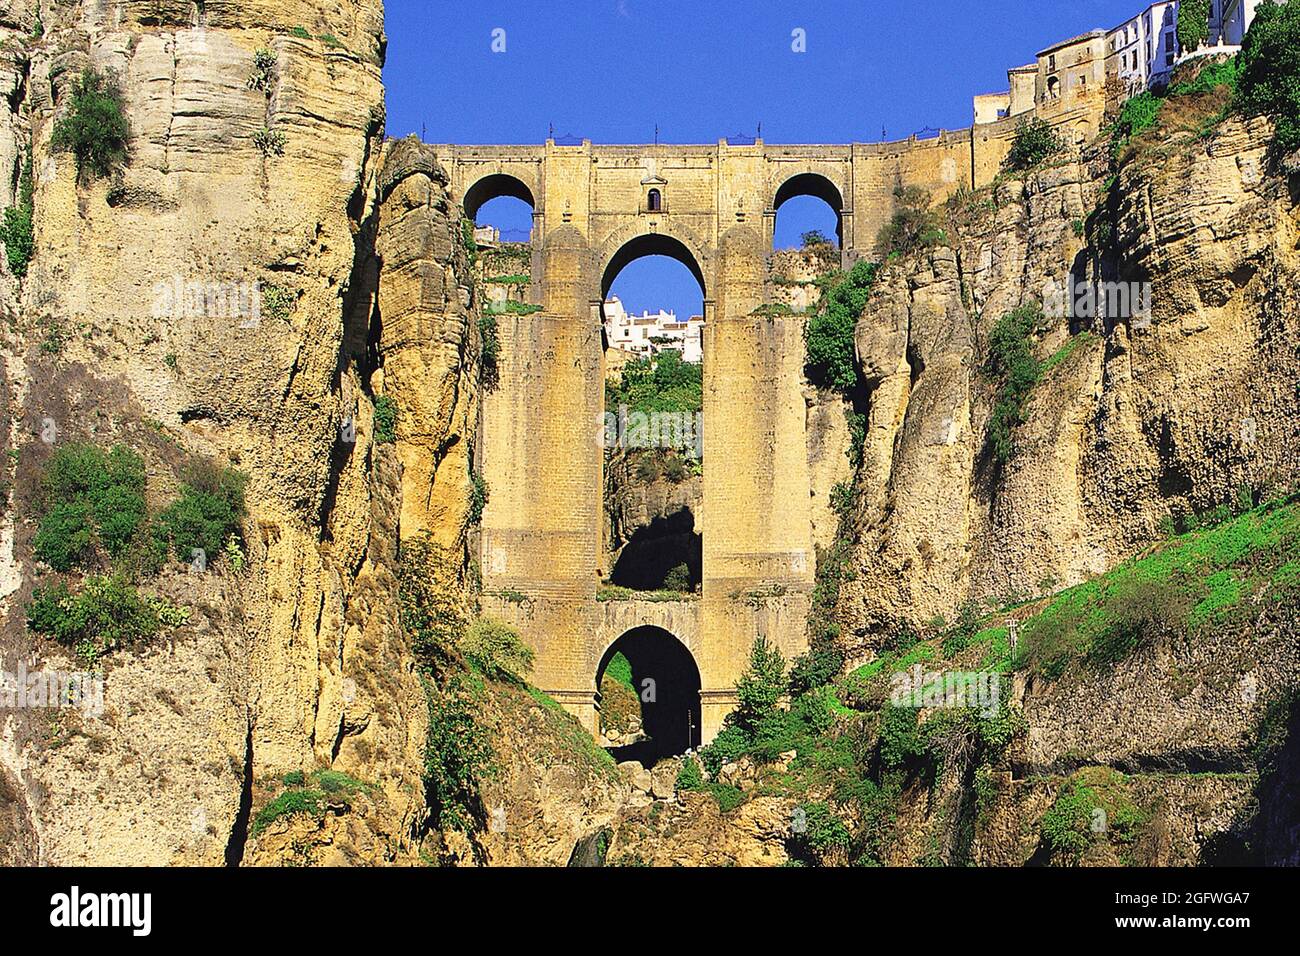 Gorge and bridge of the divided town of Ronda, in the Serrania de Ronda, Spain, Ronda Stock Photo